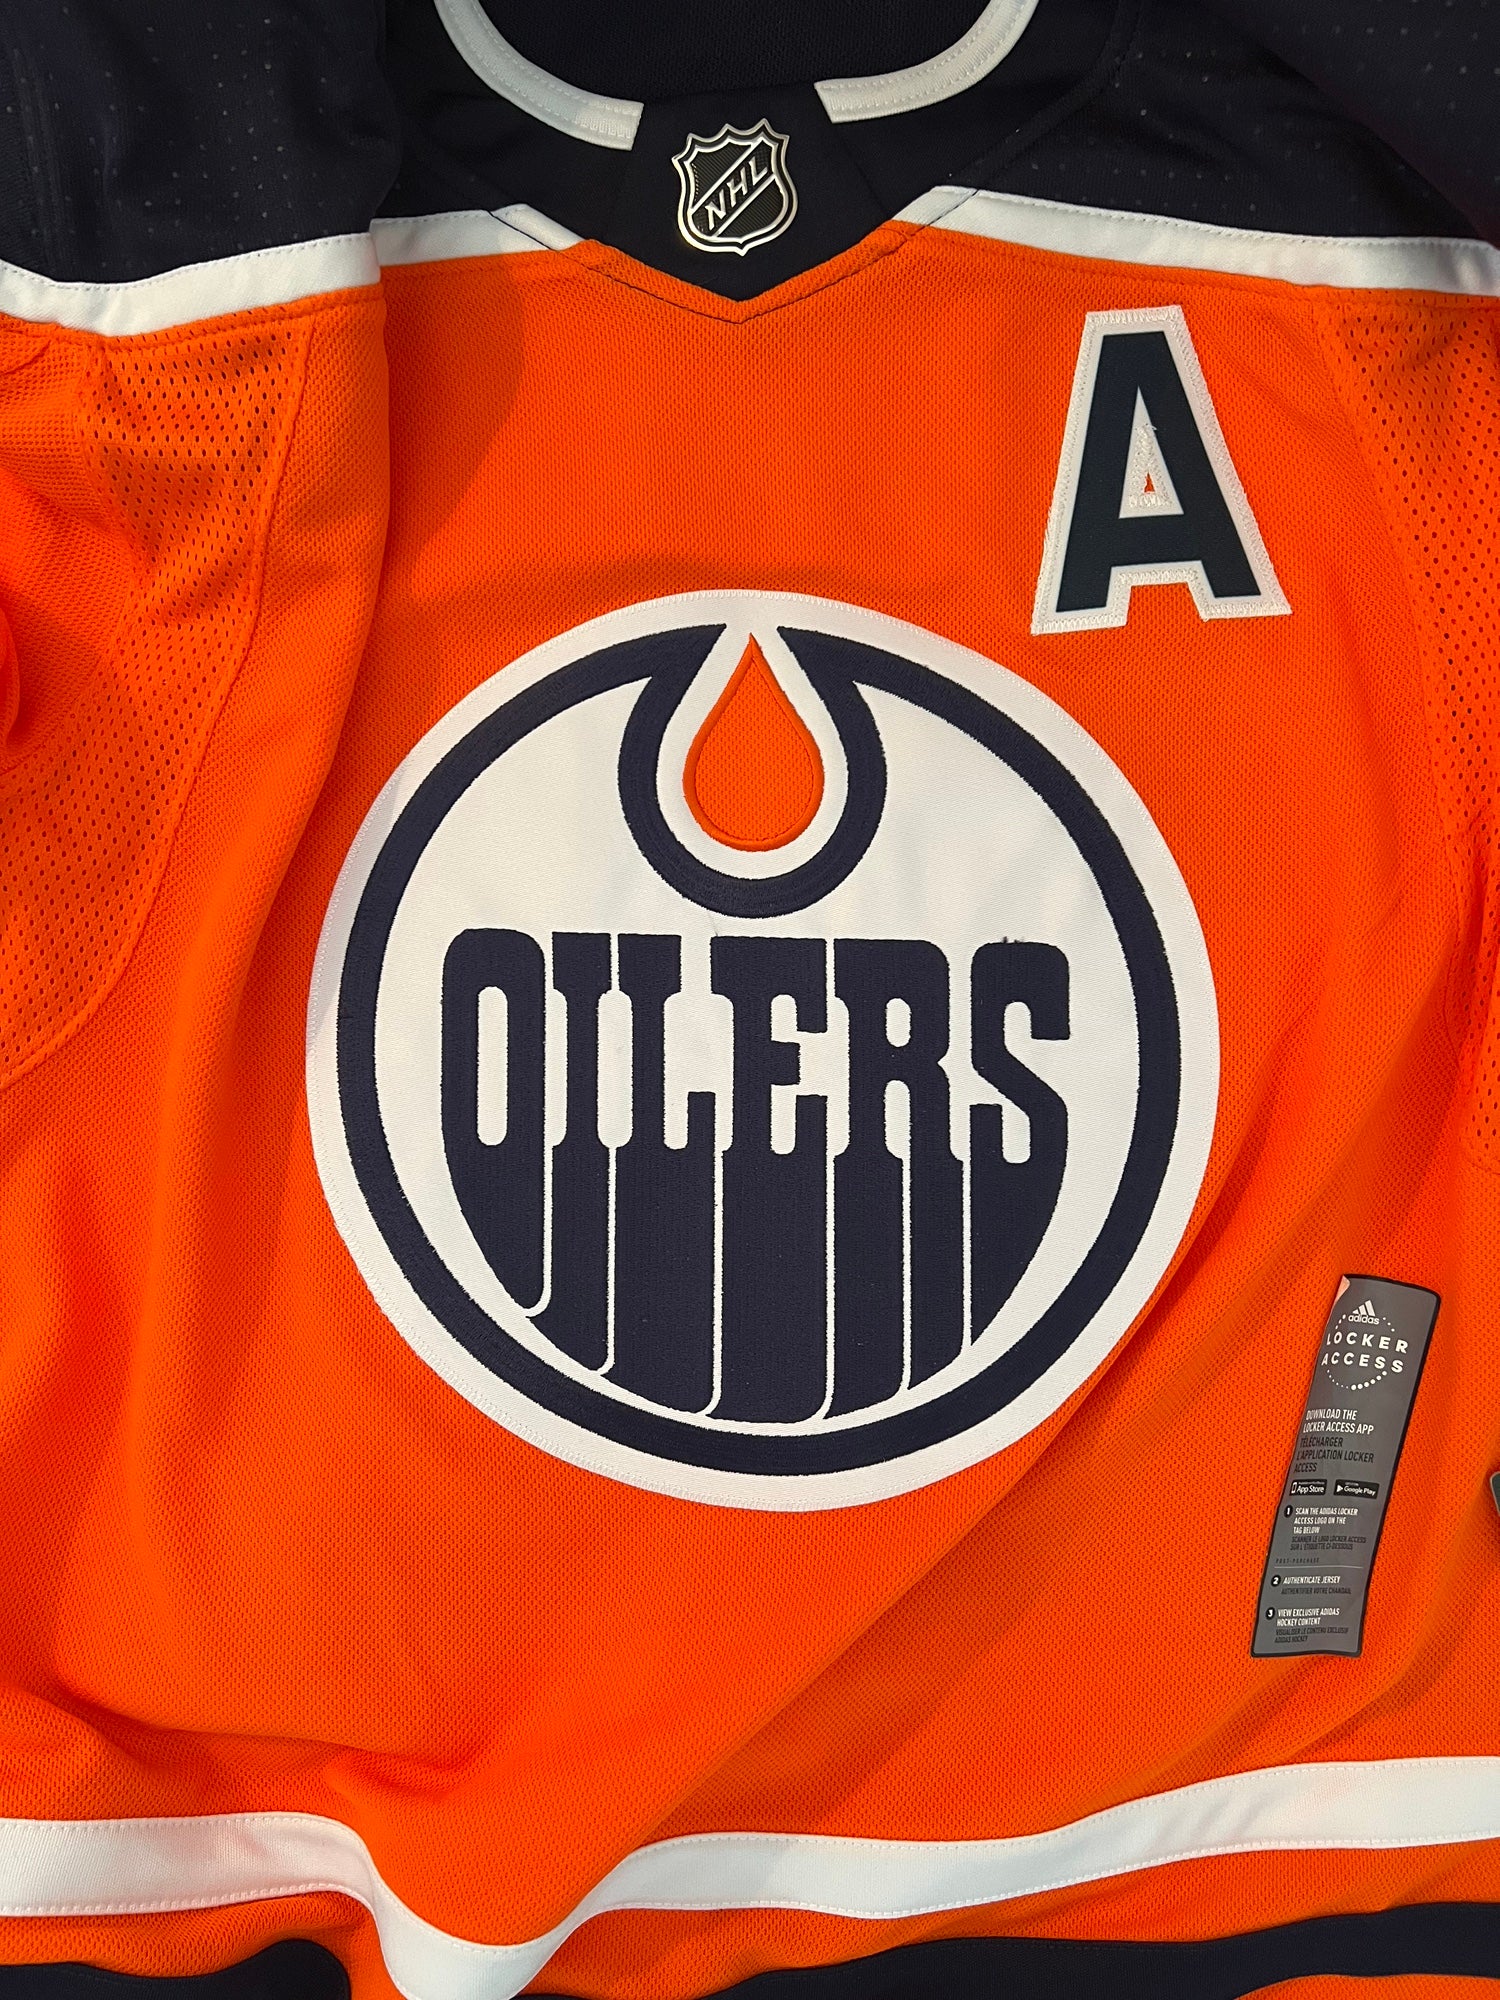 Edmonton Oilers authentic jersey